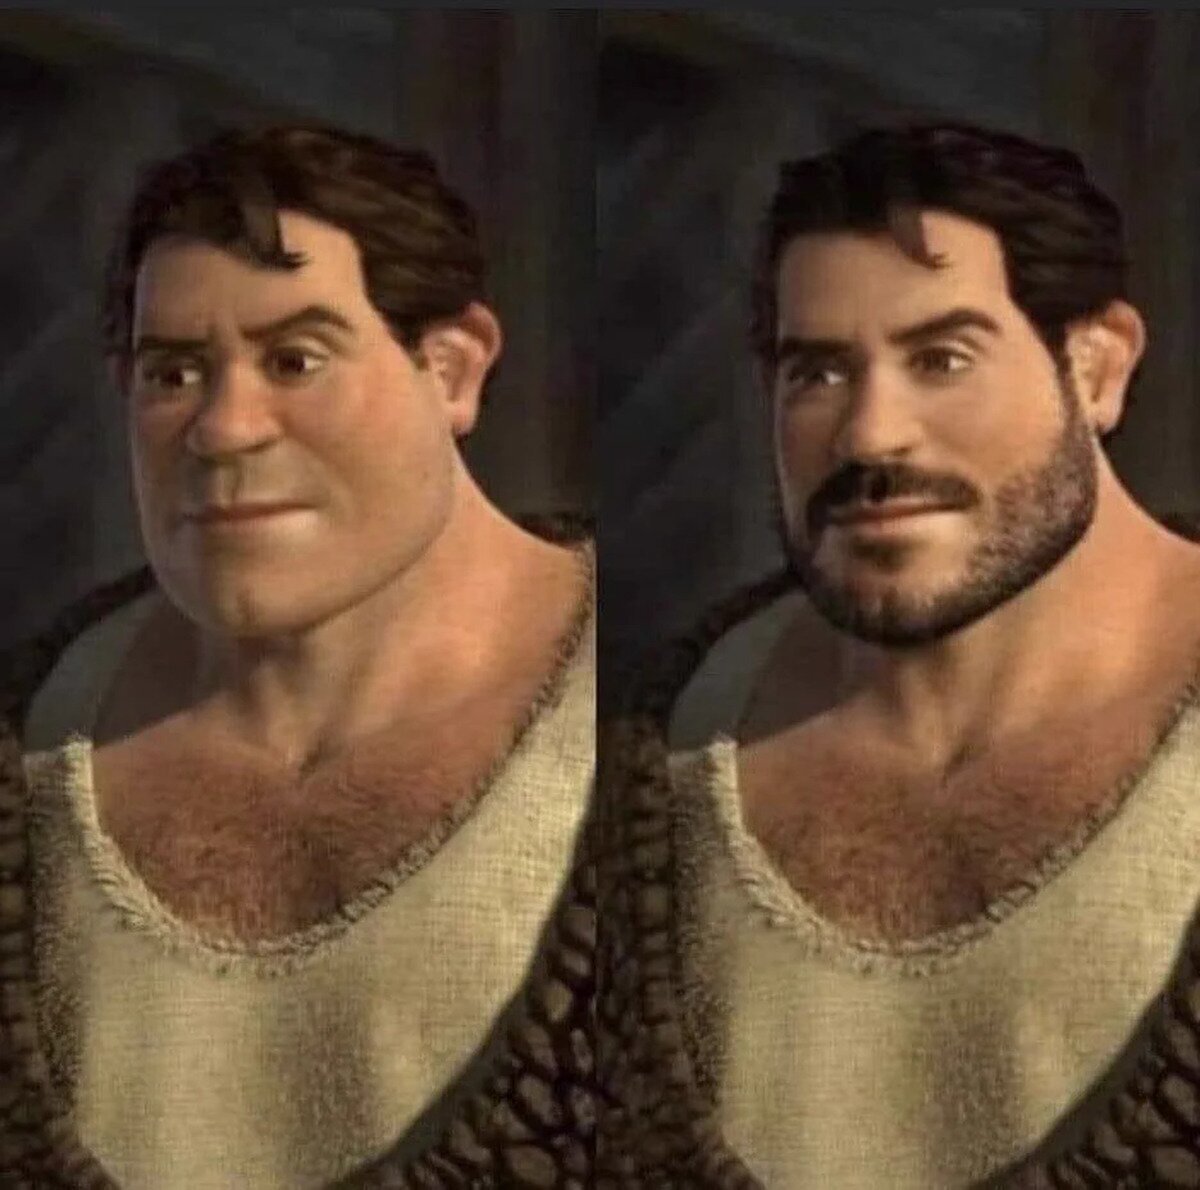 Shrek con barba se parece más a Henry Cavill que Henry Cavill